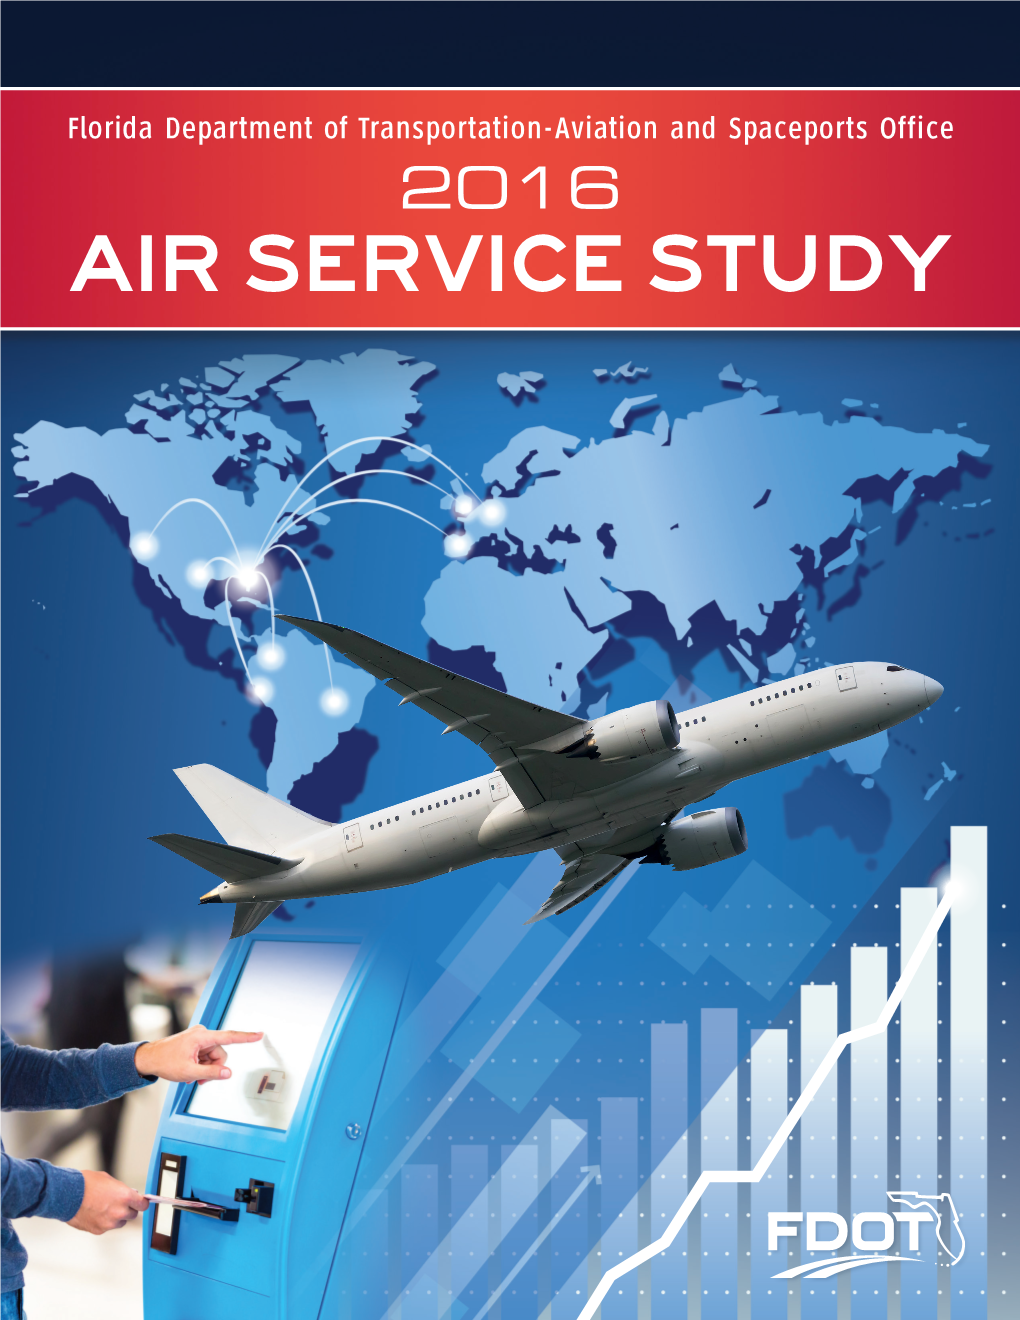 AIR SERVICE STUDY Data Explanation